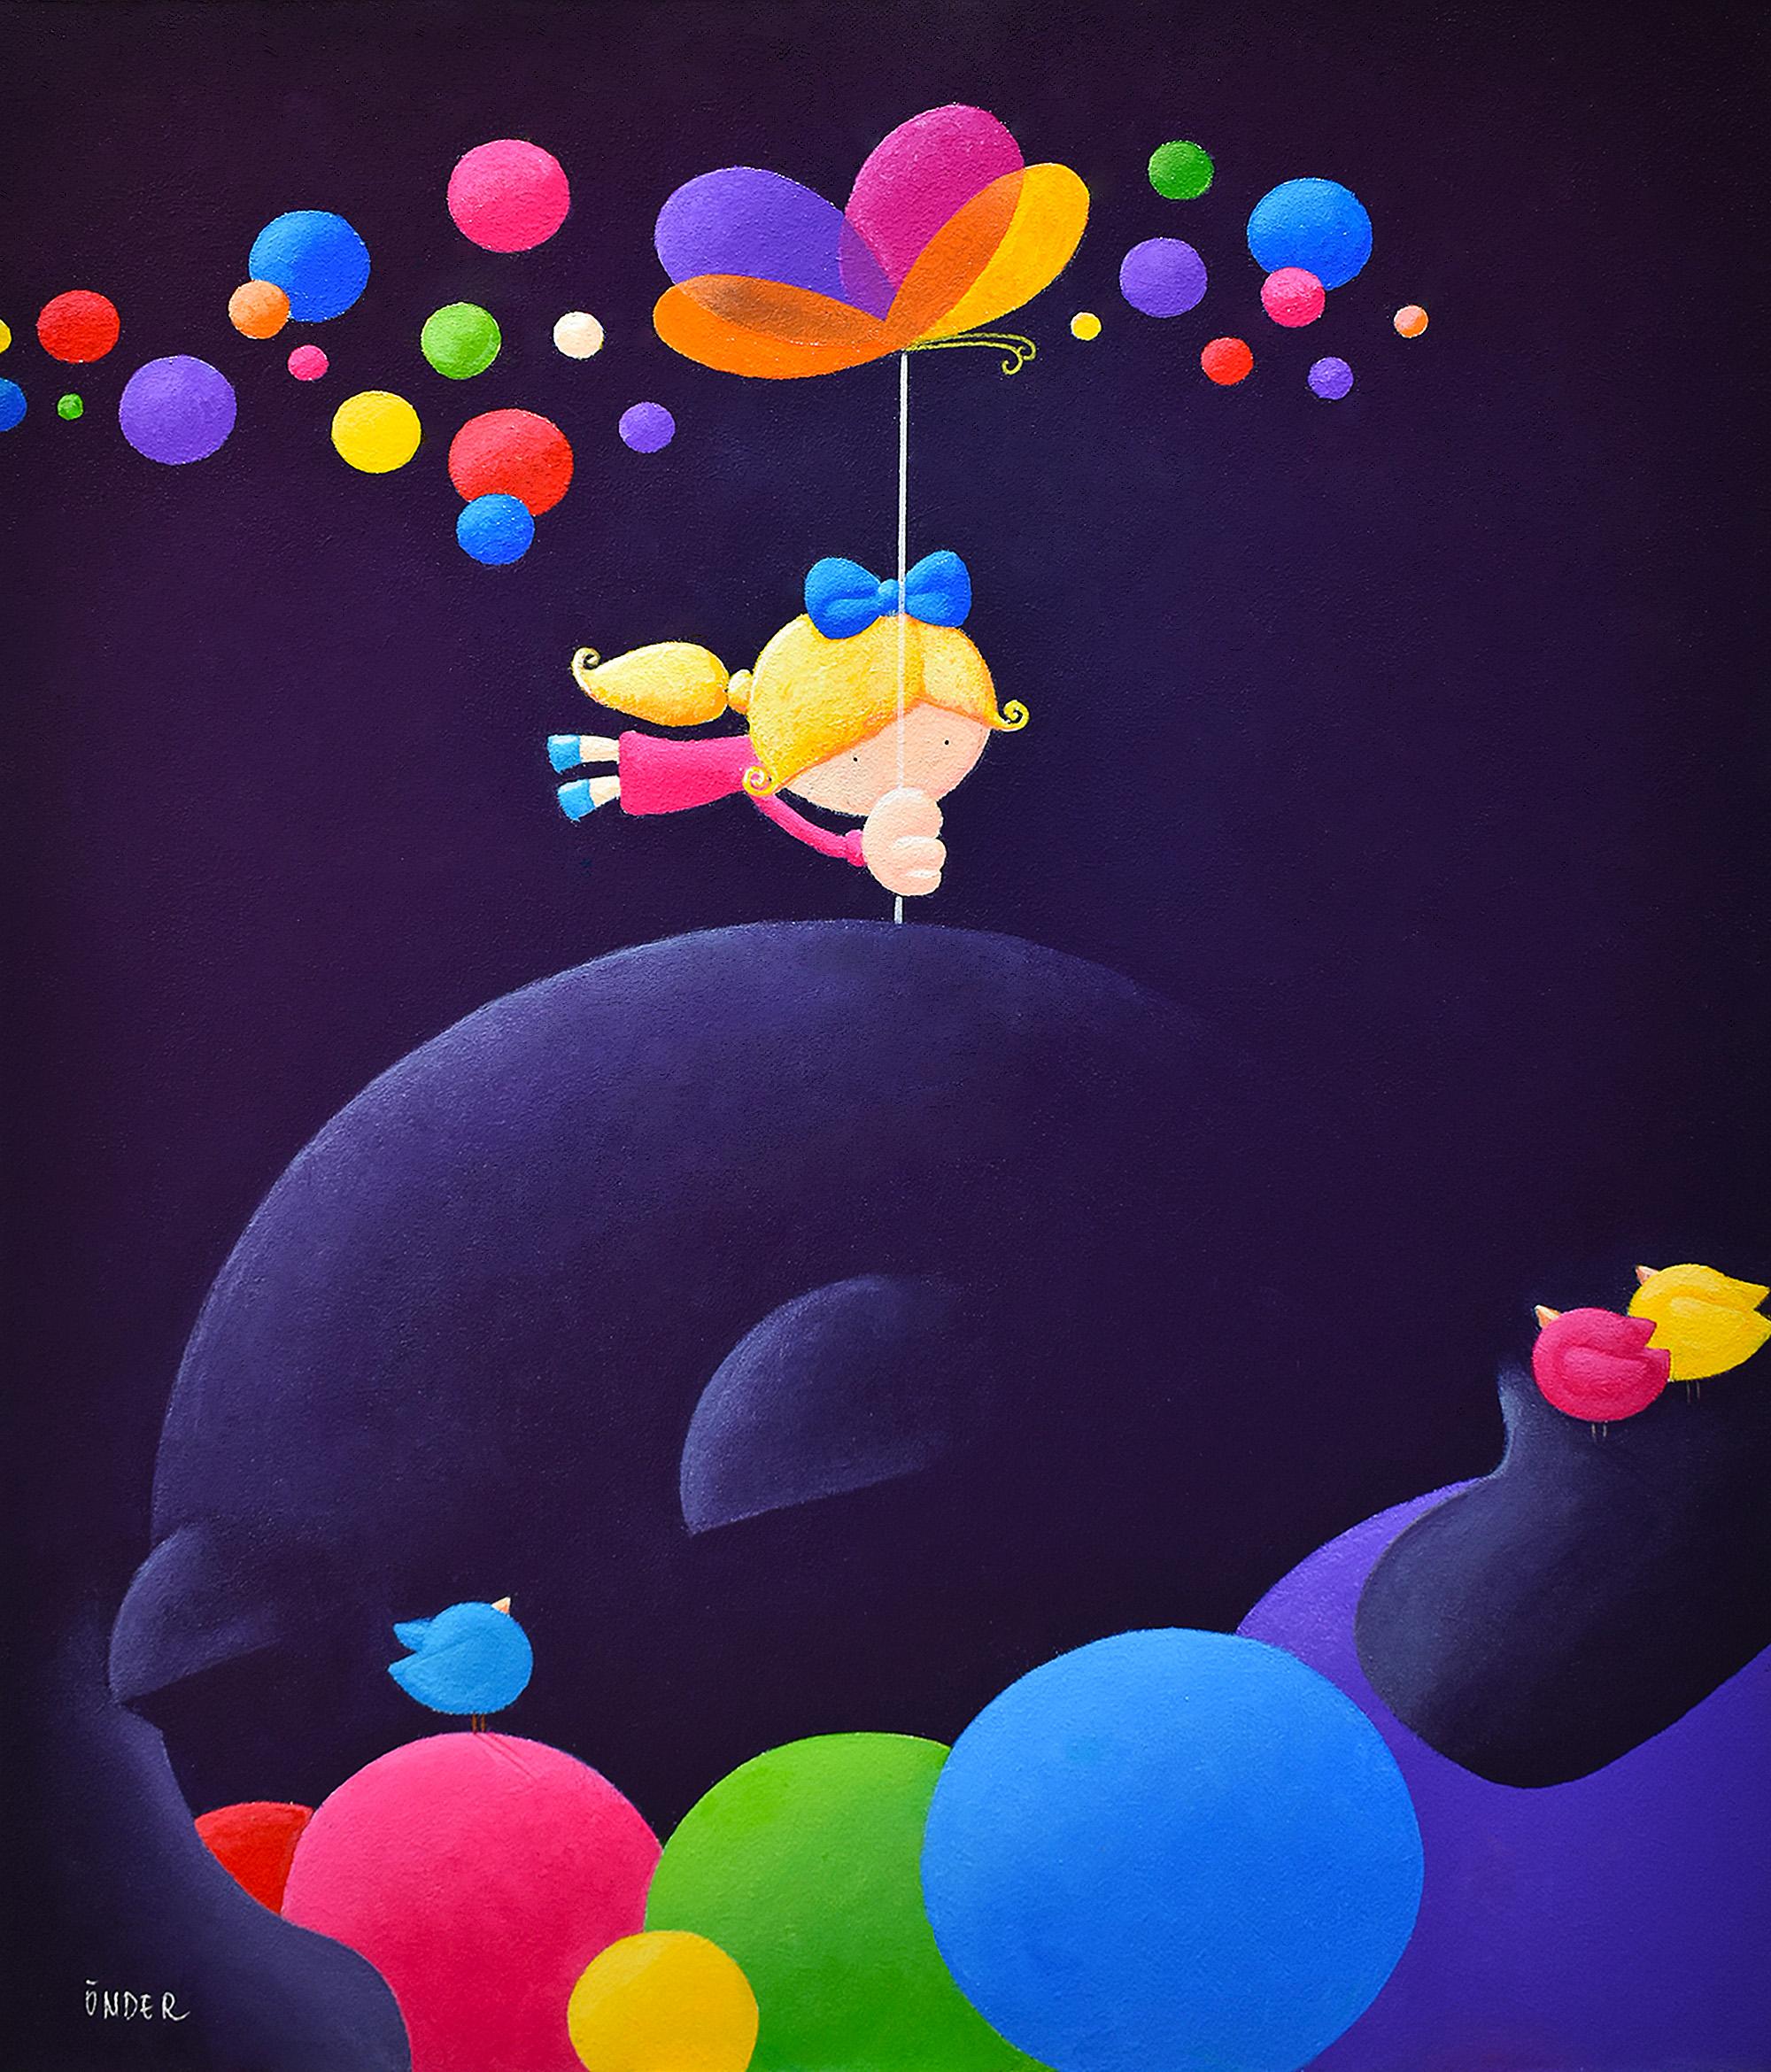 Mali Onder Animal Painting - Love Flight, I am Happy, Colourful Pop Art, Children dreams, Freedom, Happiness